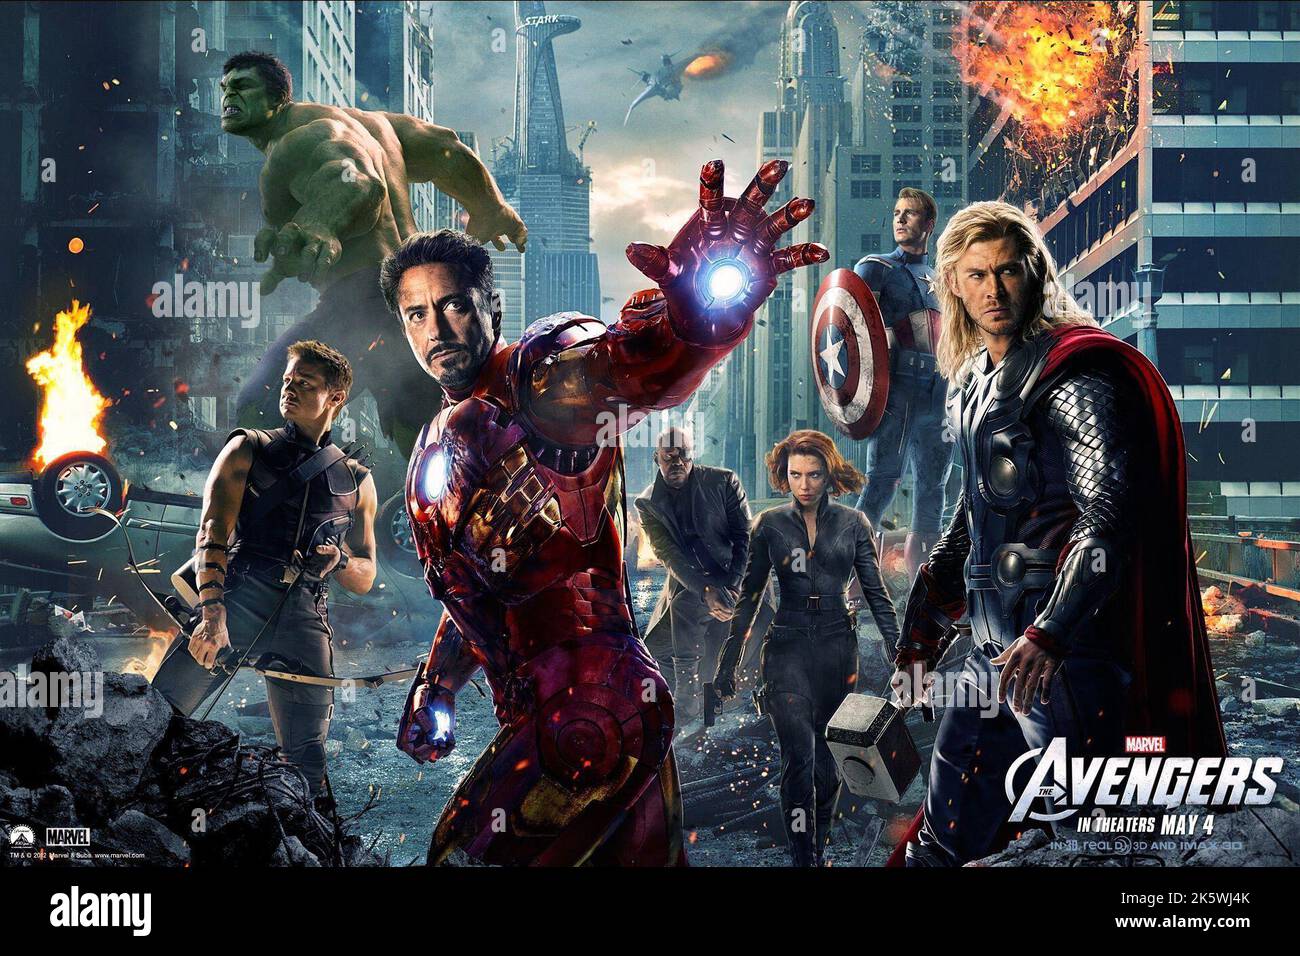 Avengers Assemble 2012 Movie Poster Stock Photo